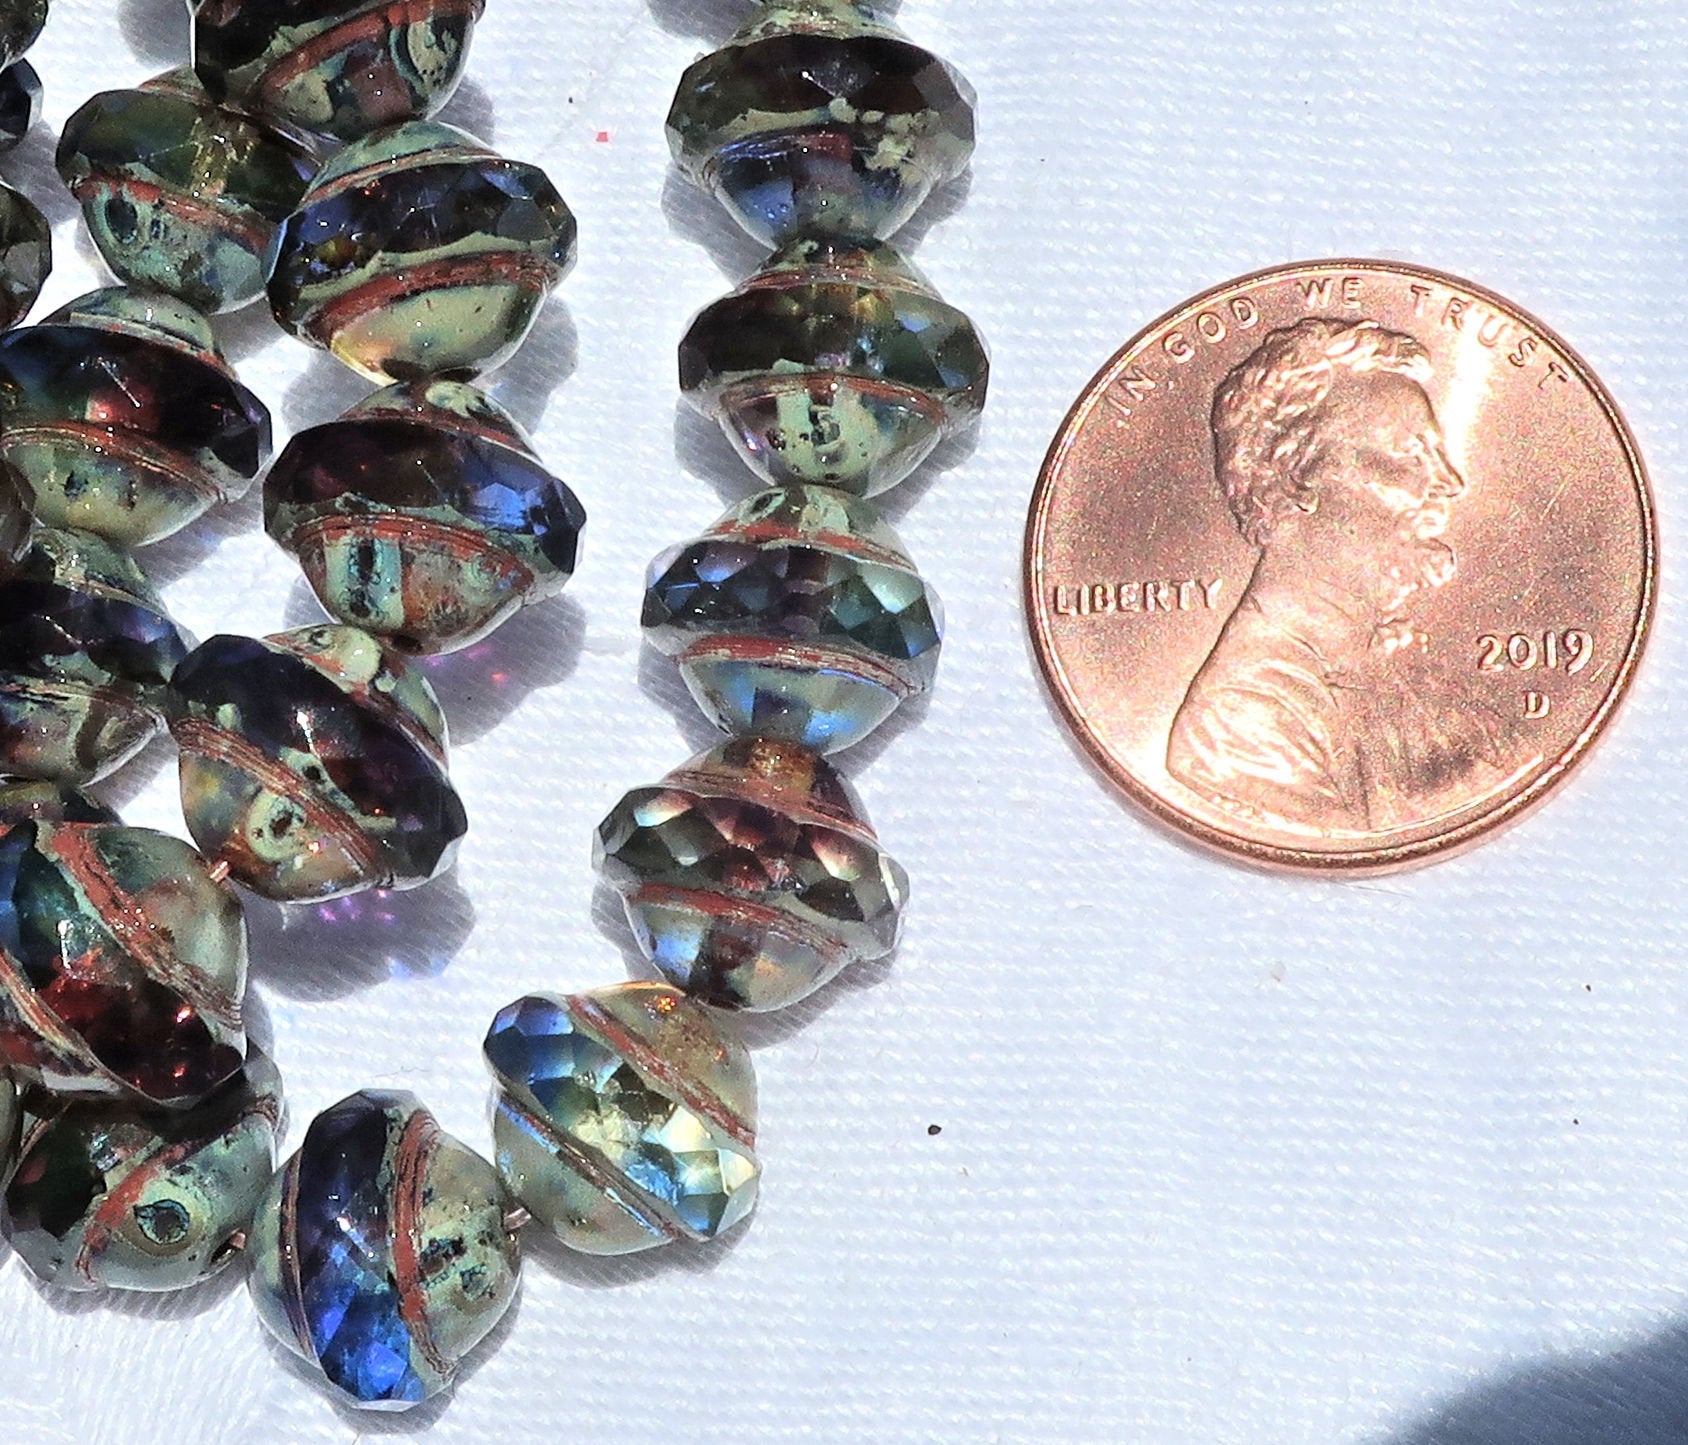 Cultured Sea Glass coin puffed Beads <b>20mm</b> 82-Teal  (5-pc-str)(4-in-str) per <b>5-str-hank</b>